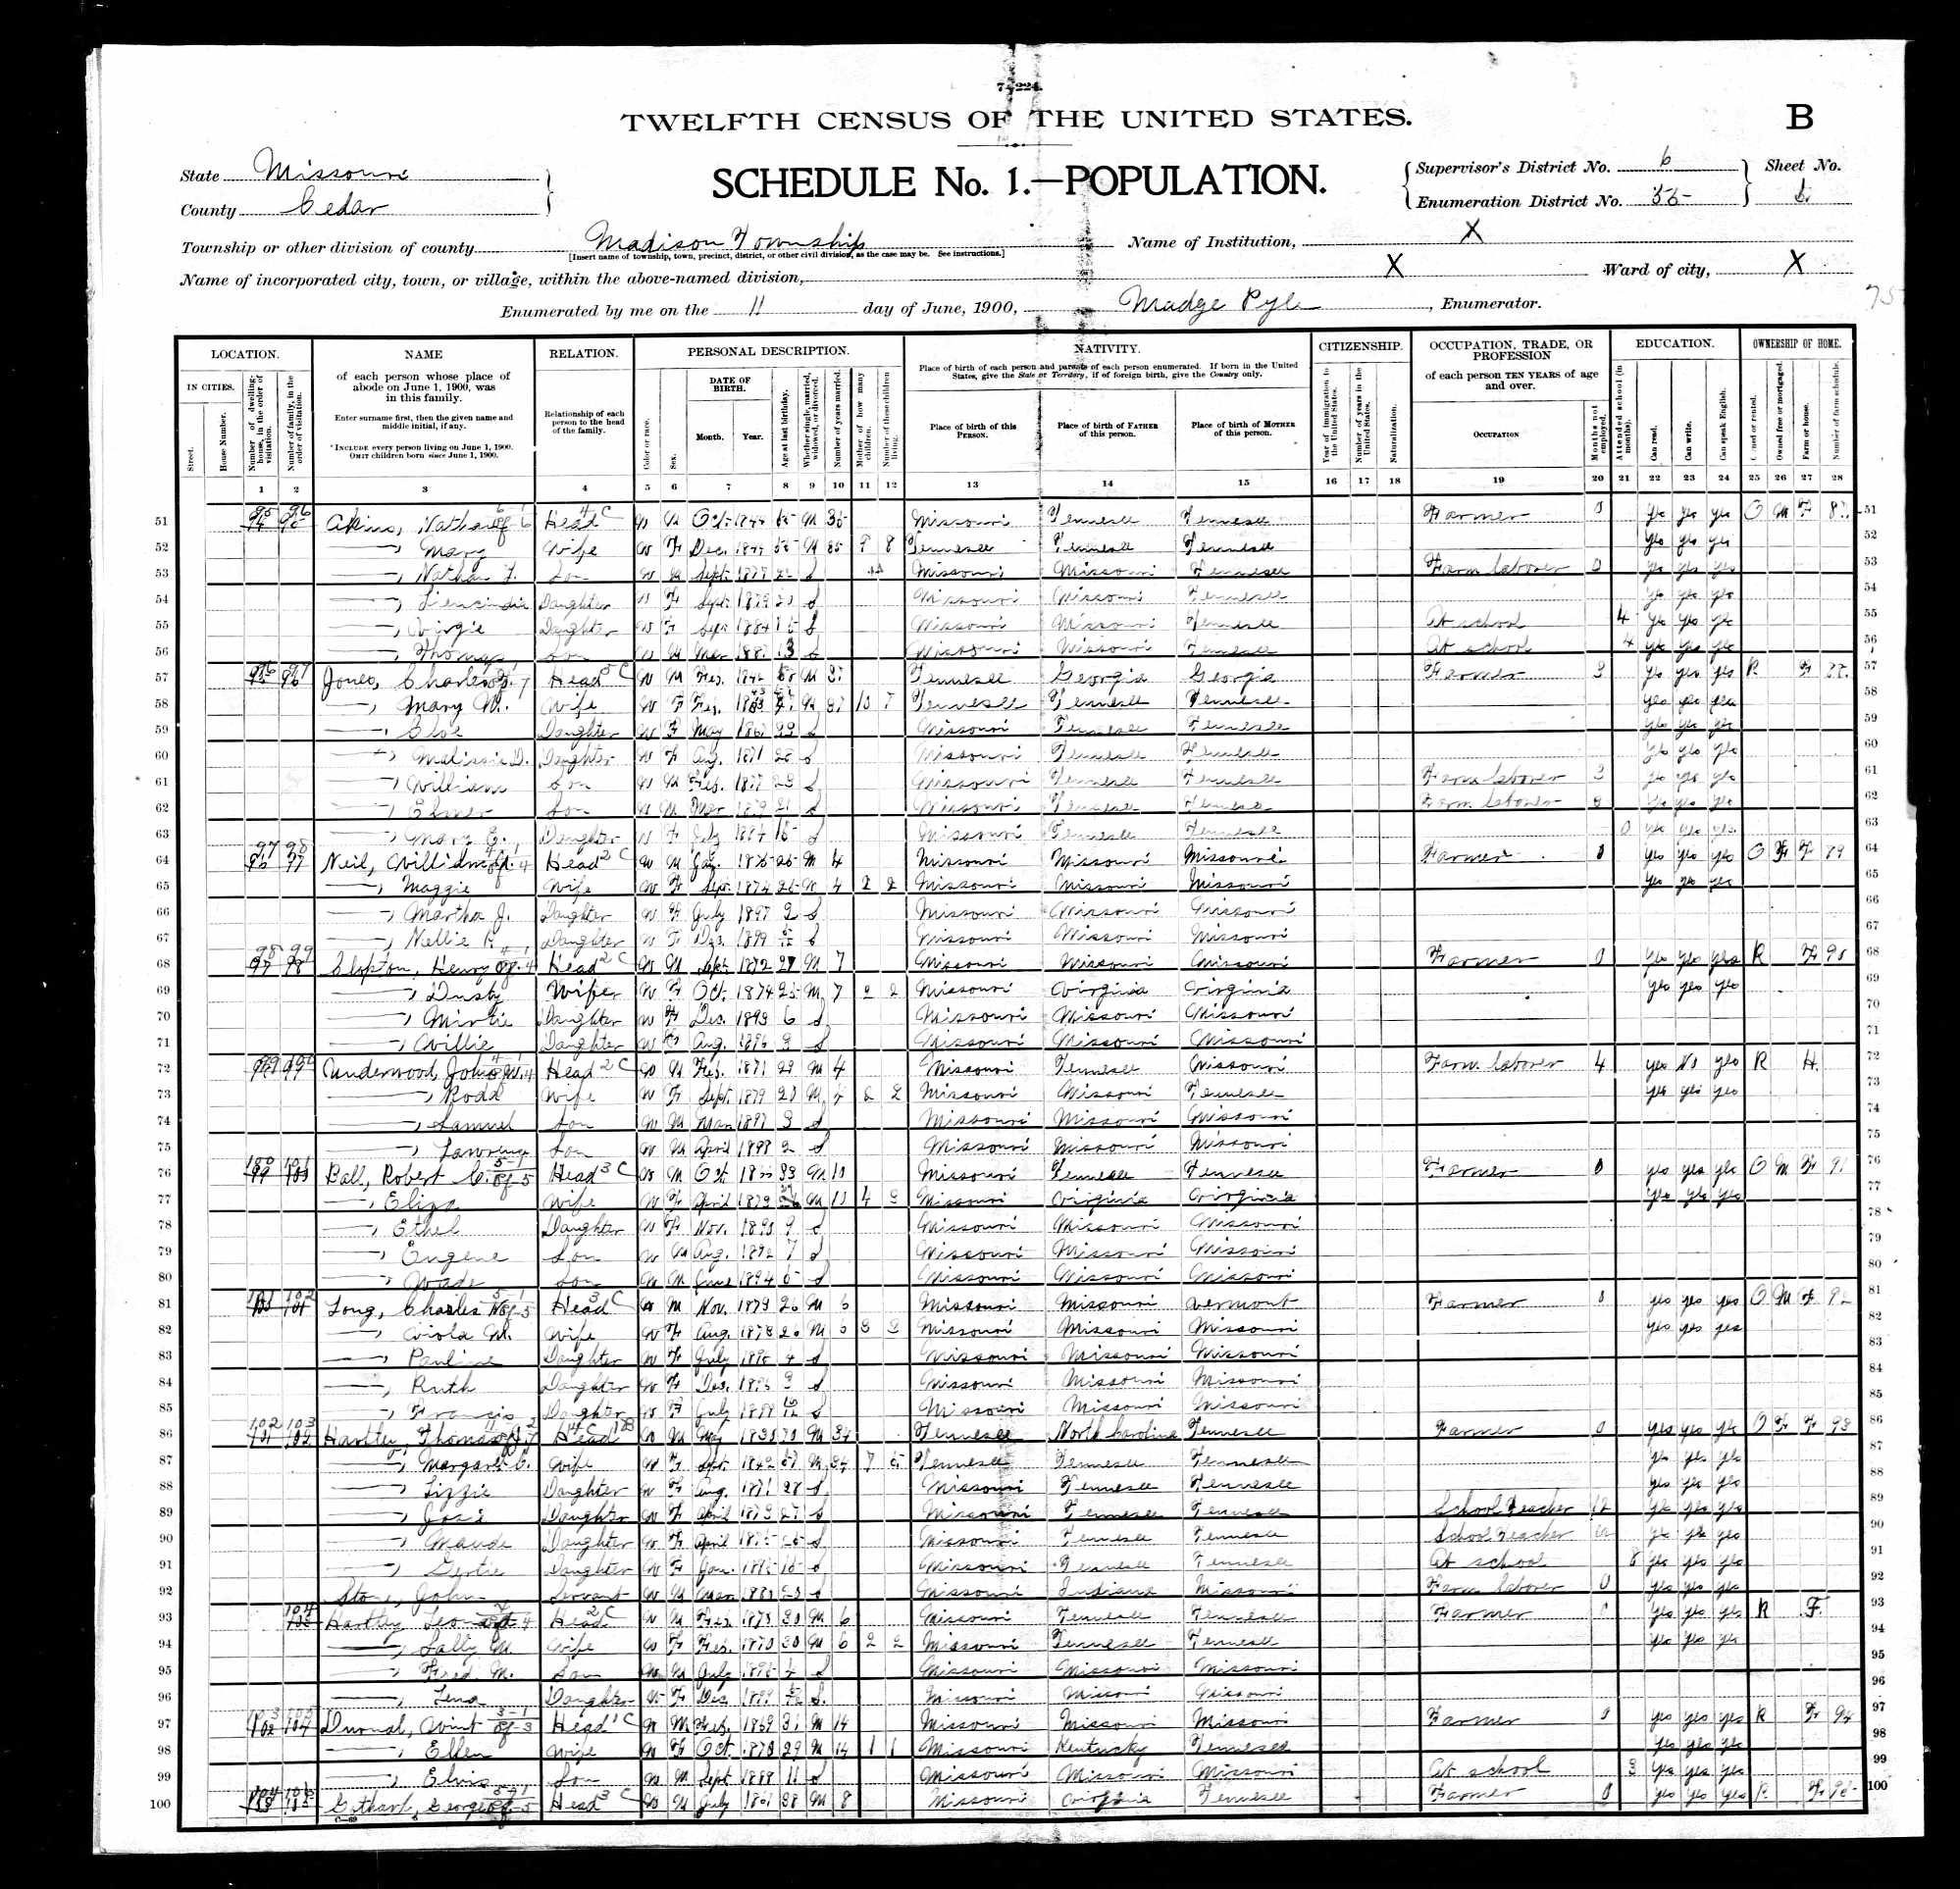 Thomas J. Hartley, 1900 Cedar County, Missouri, census